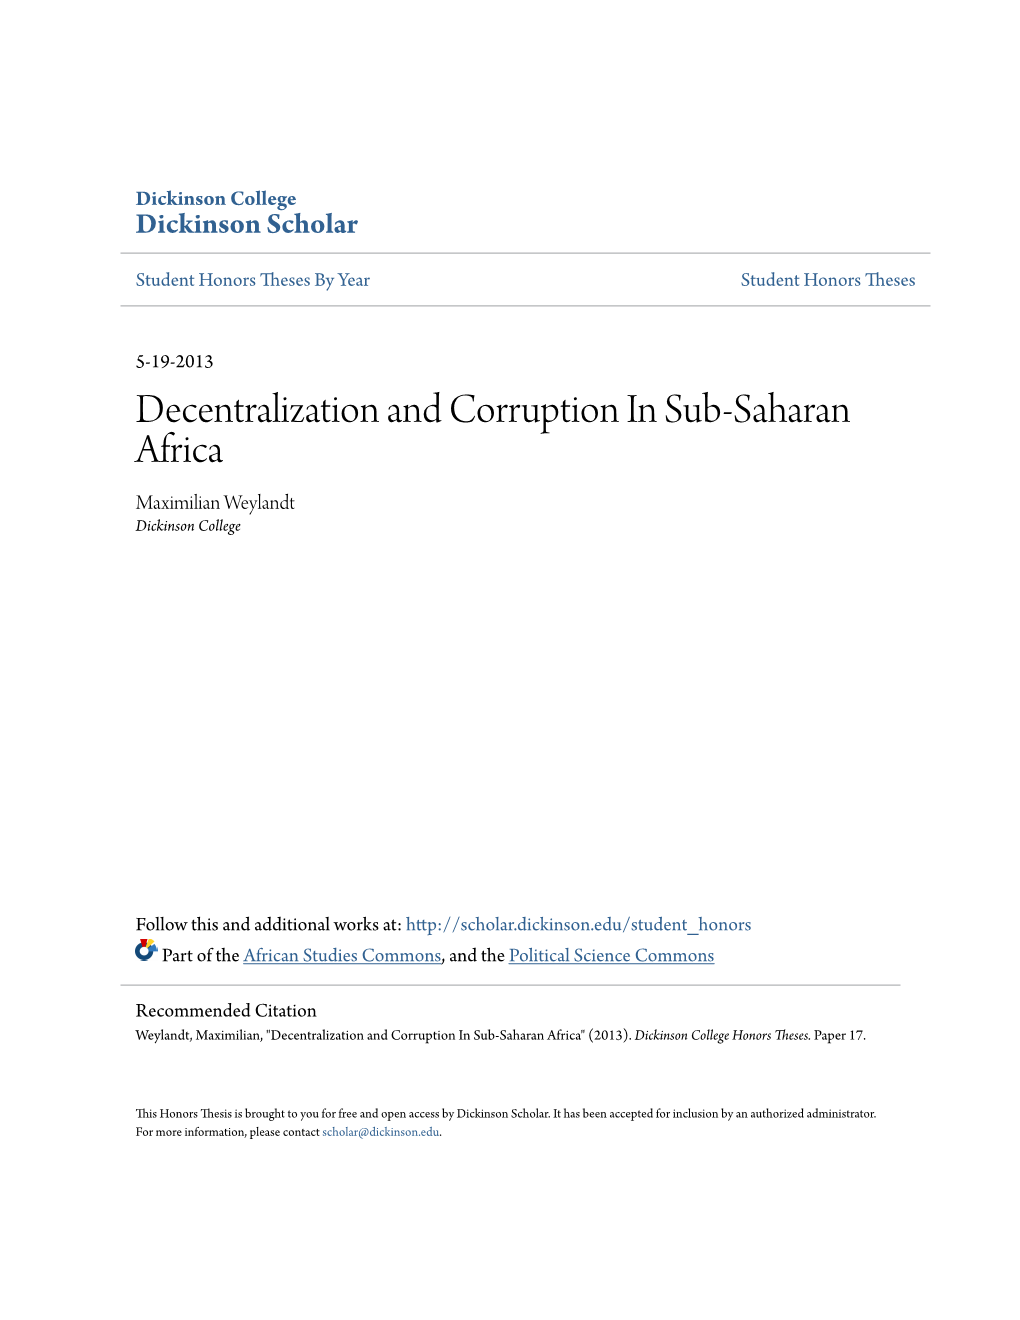 Decentralization and Corruption in Sub-Saharan Africa Maximilian Weylandt Dickinson College